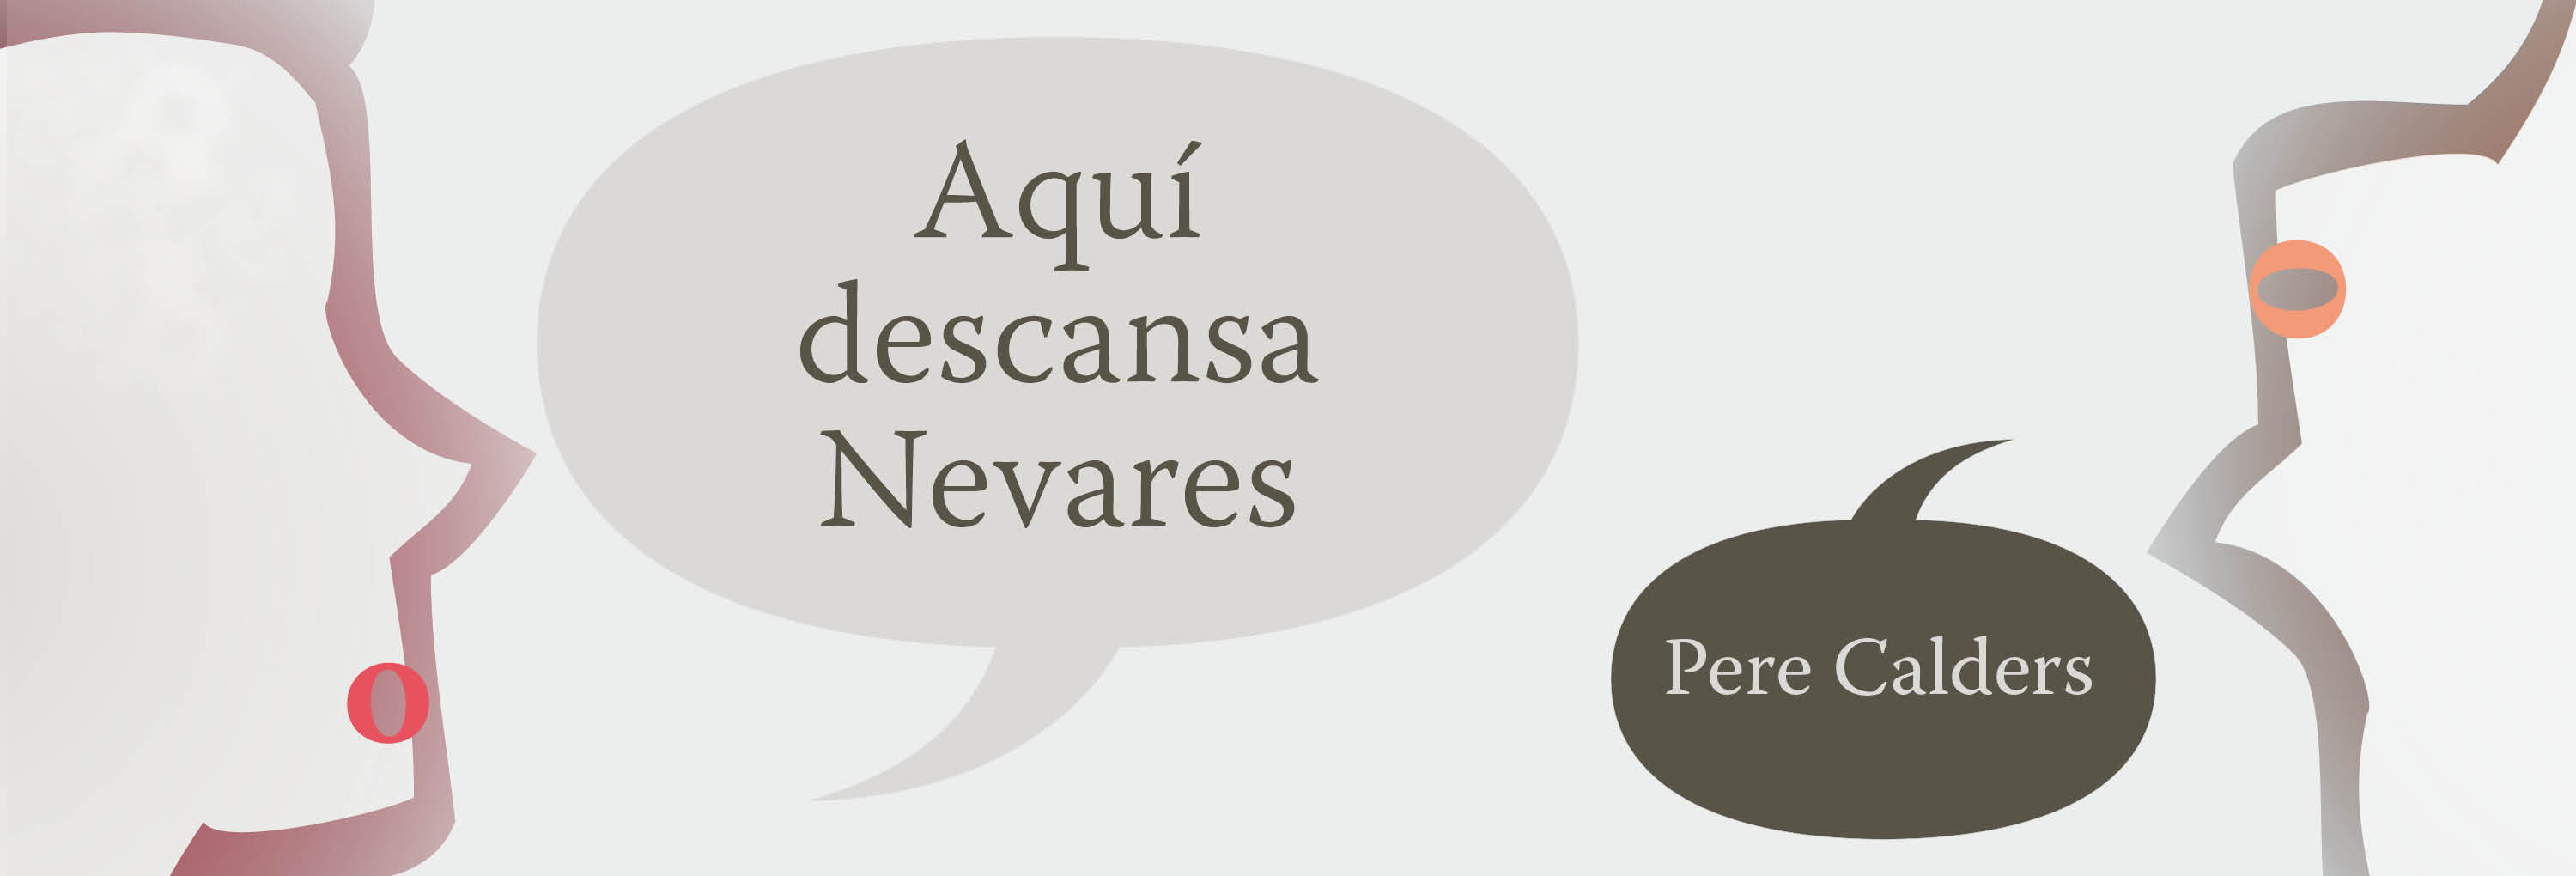 Banner del texto Aquí descansa Nevares de Pere Calders